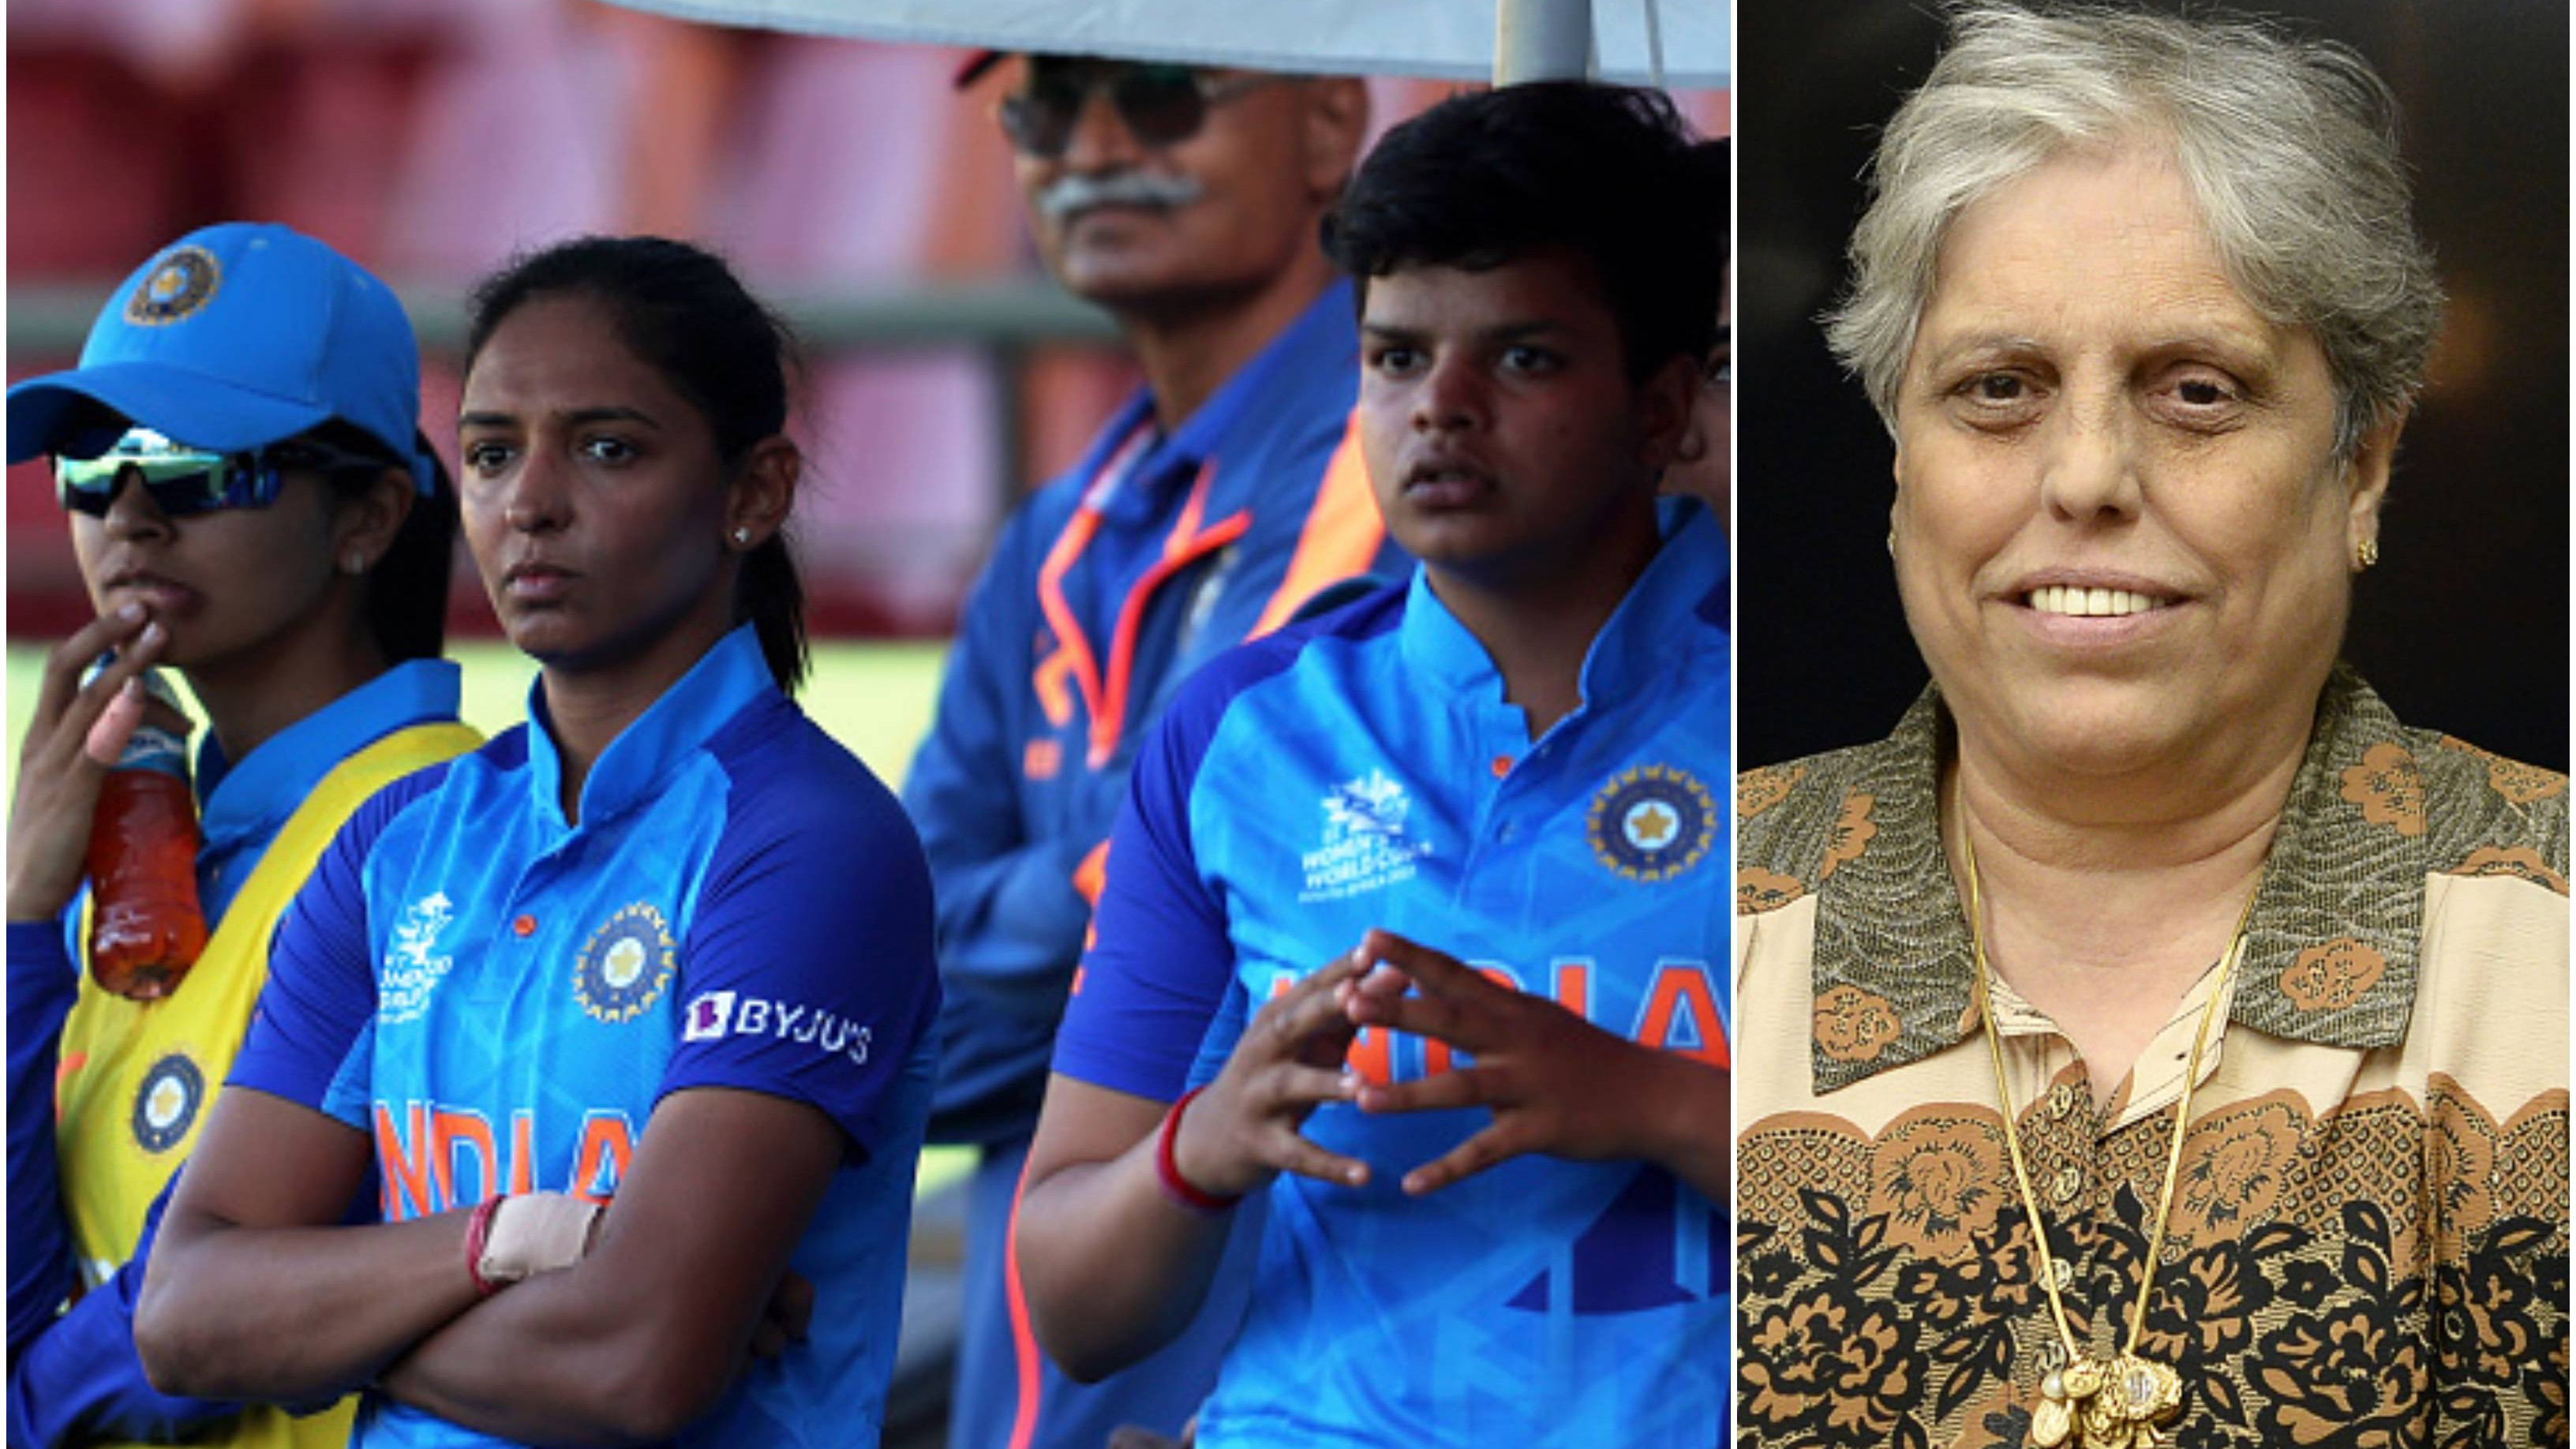 “They need absolute danda”: Diana Edulji slams Harmanpreet-led Indian team after semi-final loss to Australia